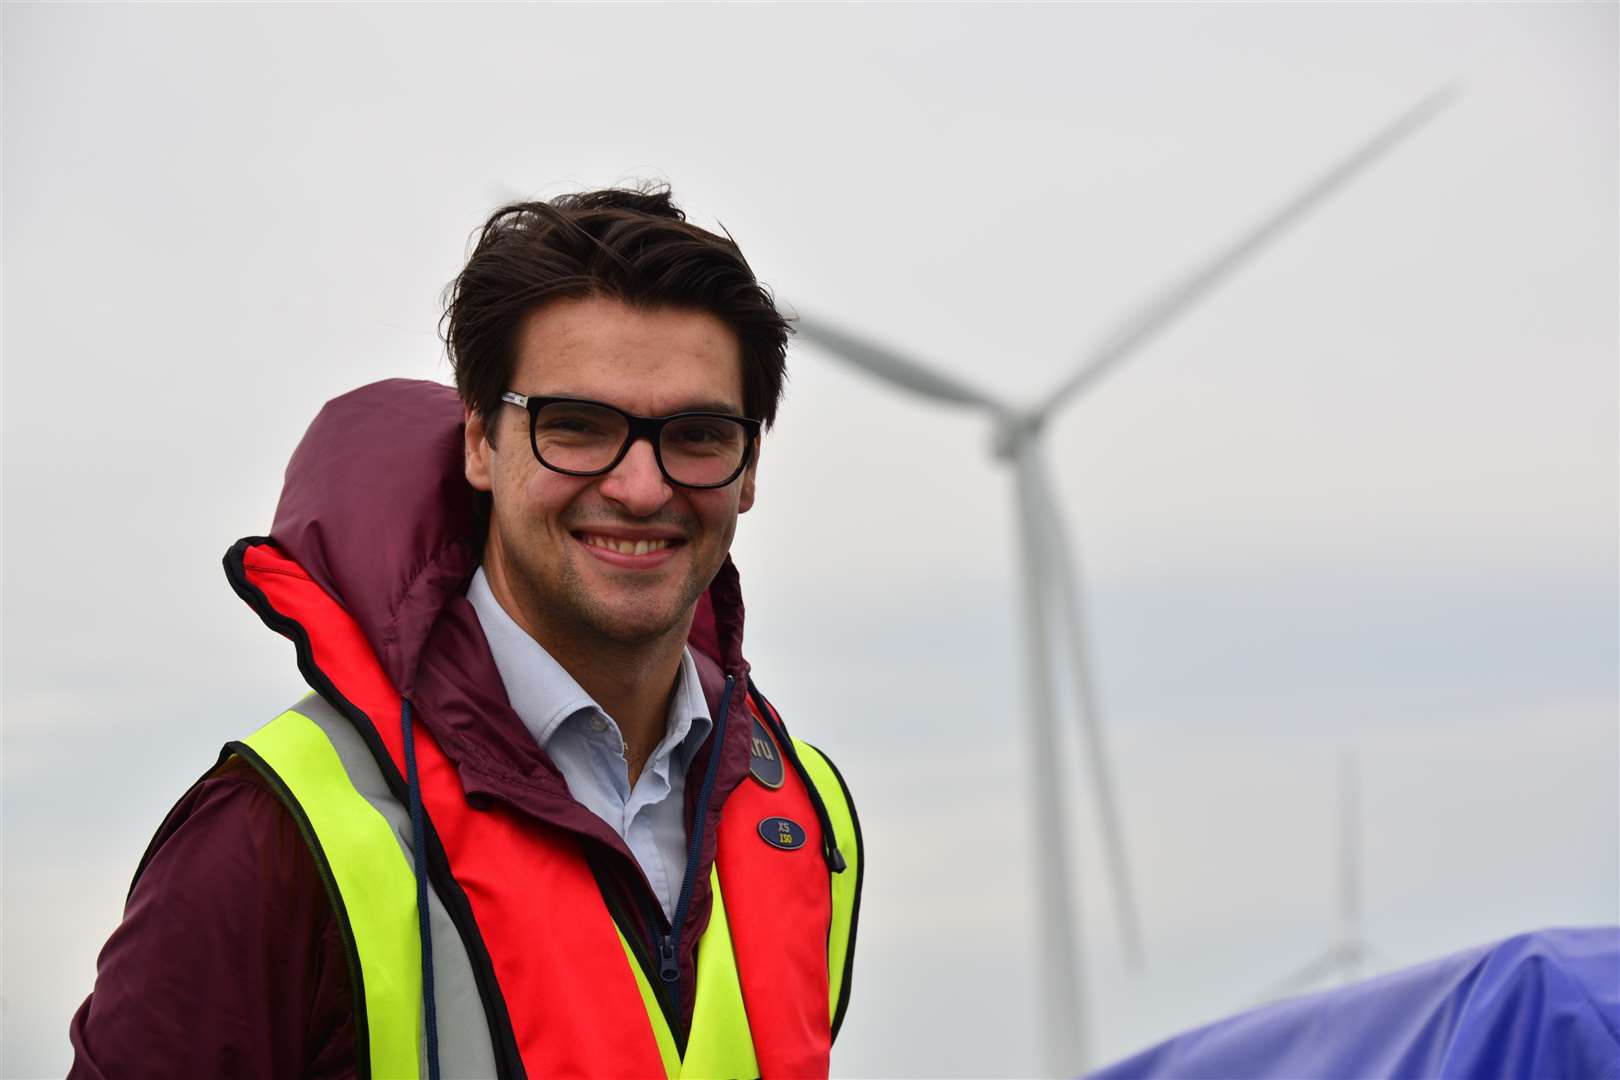 Business editor Chris Price at the Kentish Flats wind farm